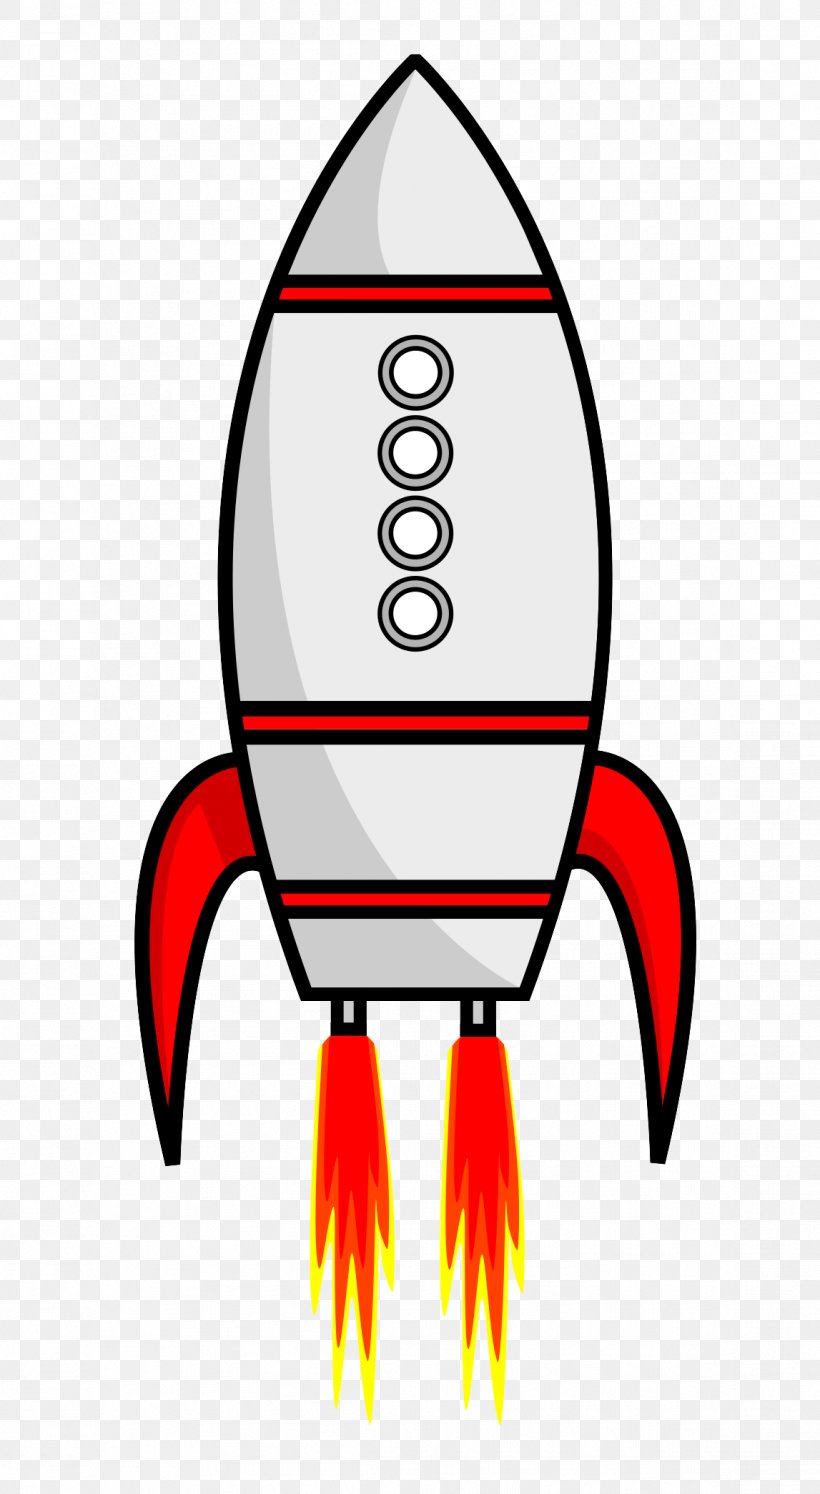 Rocket Clip Art Spacecraft Vehicle, PNG, 1147x2091px, Rocket, Spacecraft, Vehicle Download Free